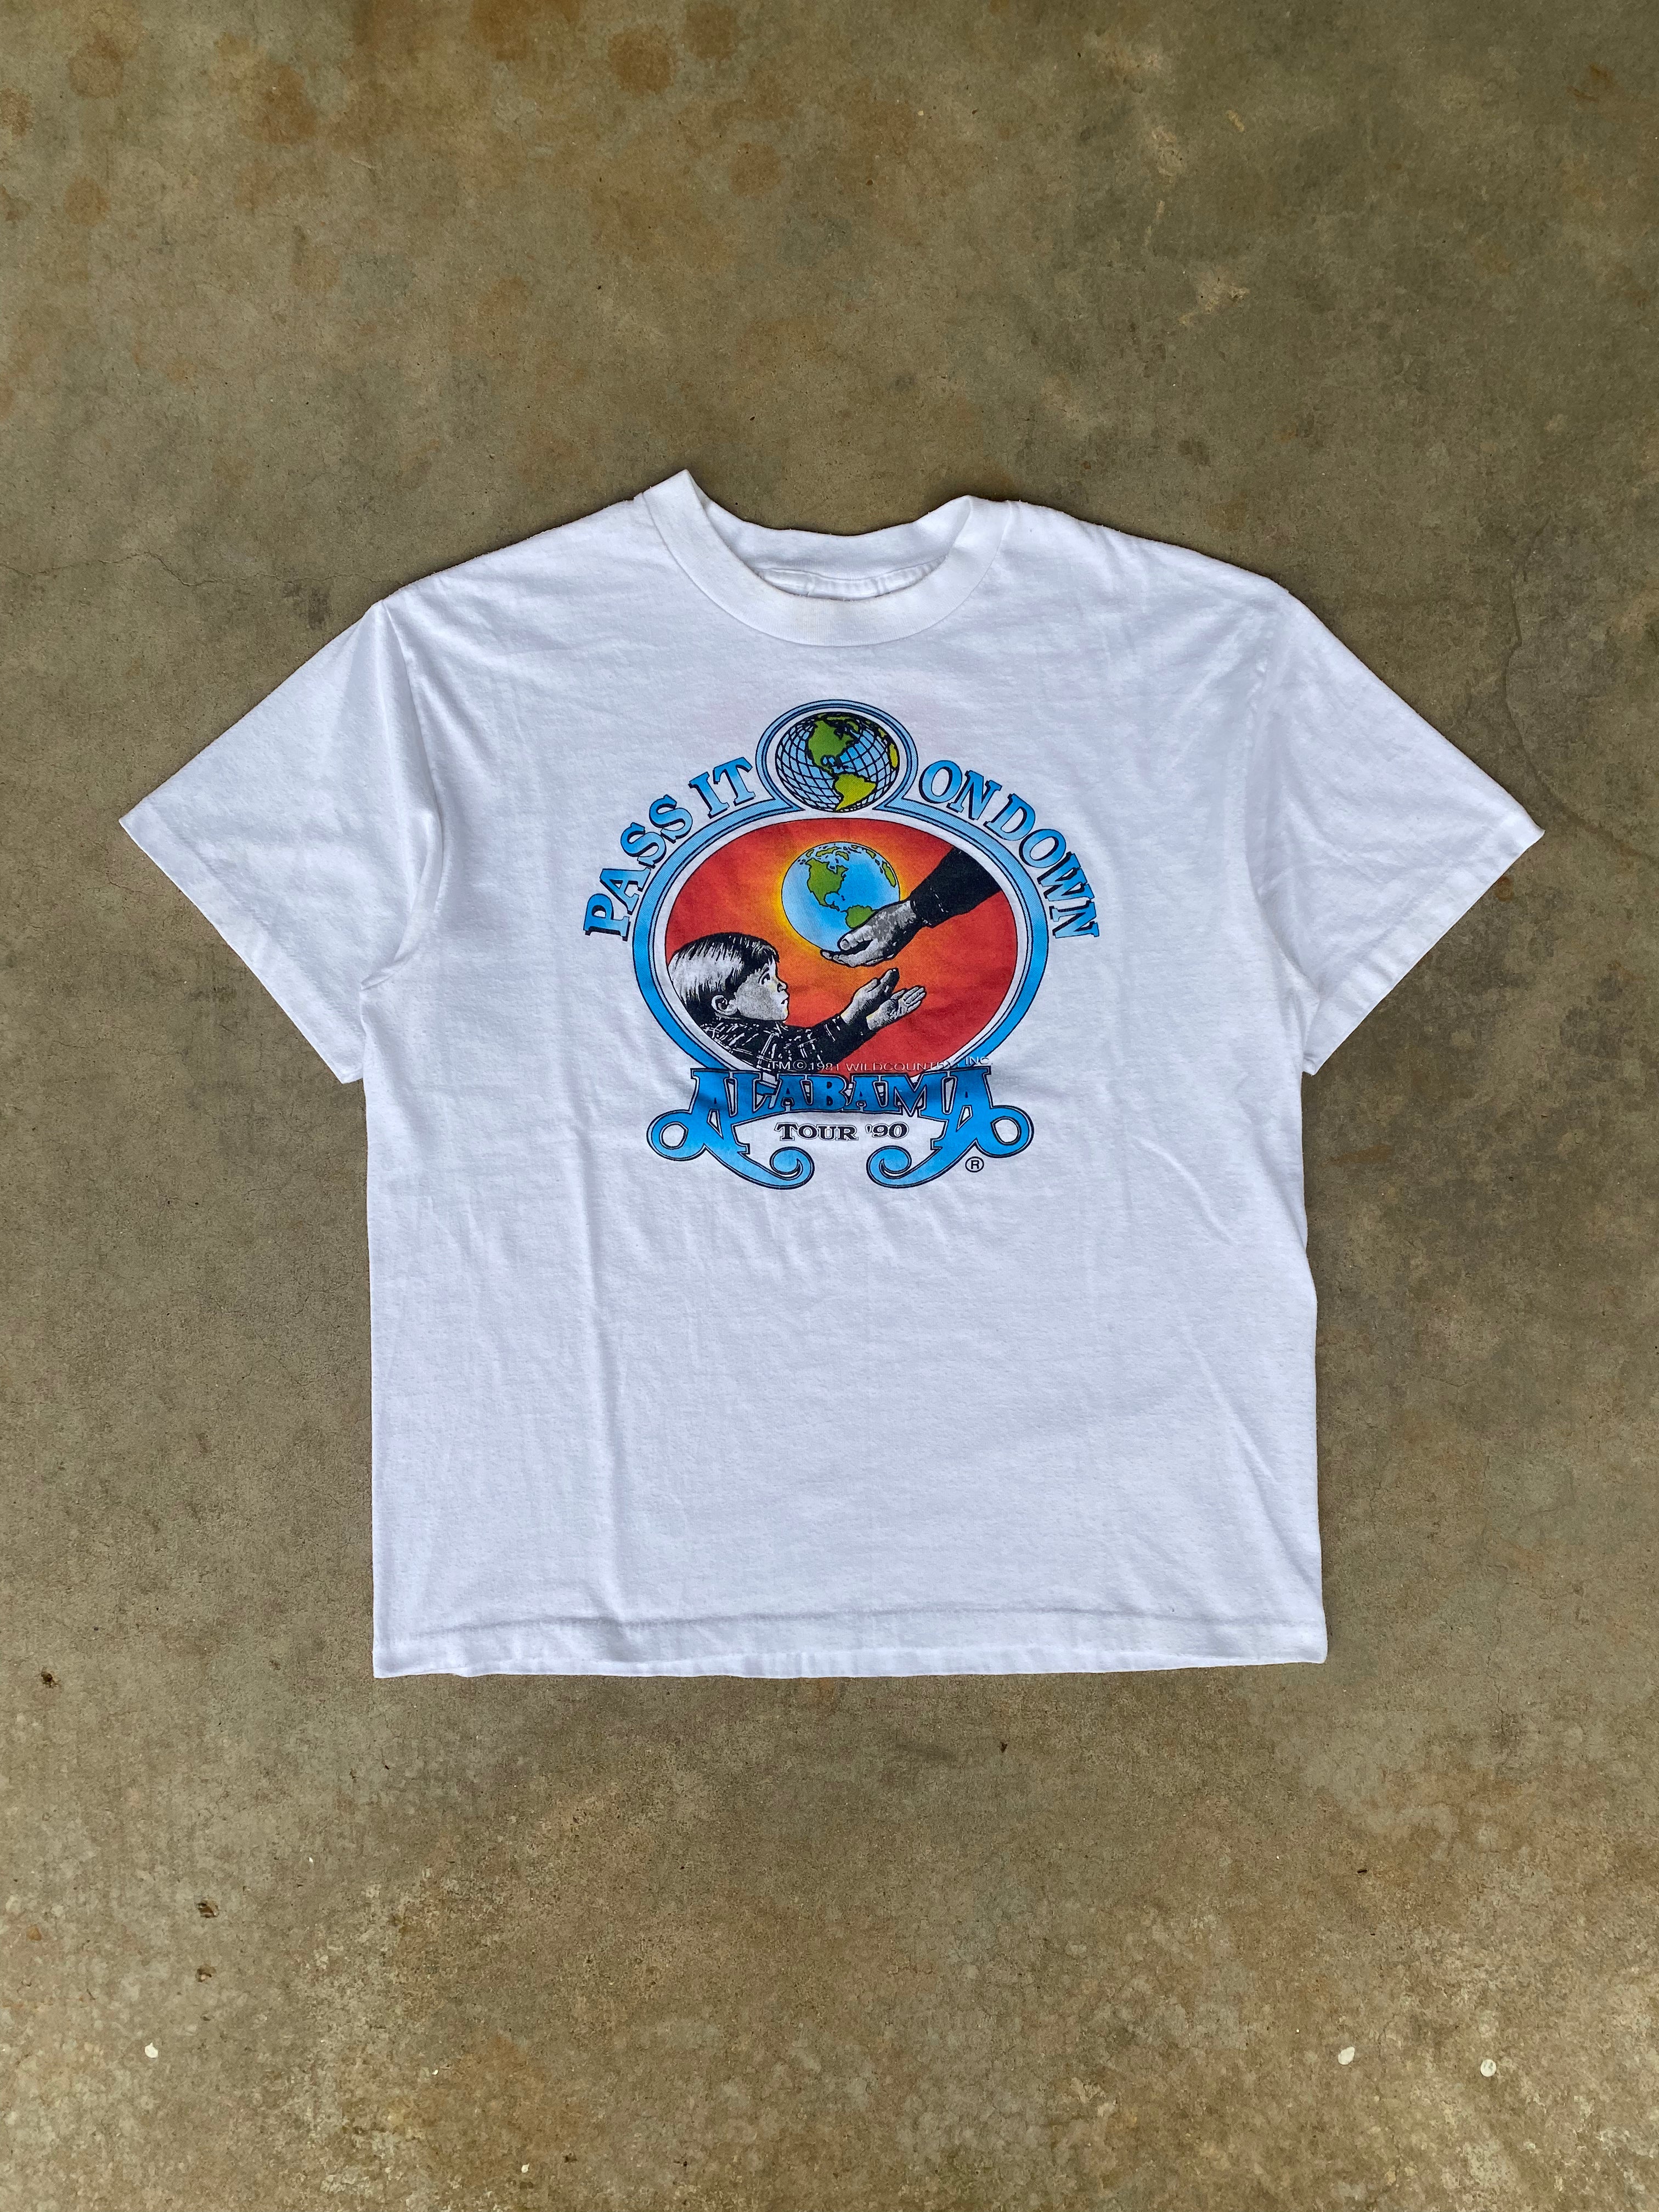 1990 Alabama “Pass it Down” Tour T-Shirt (L)